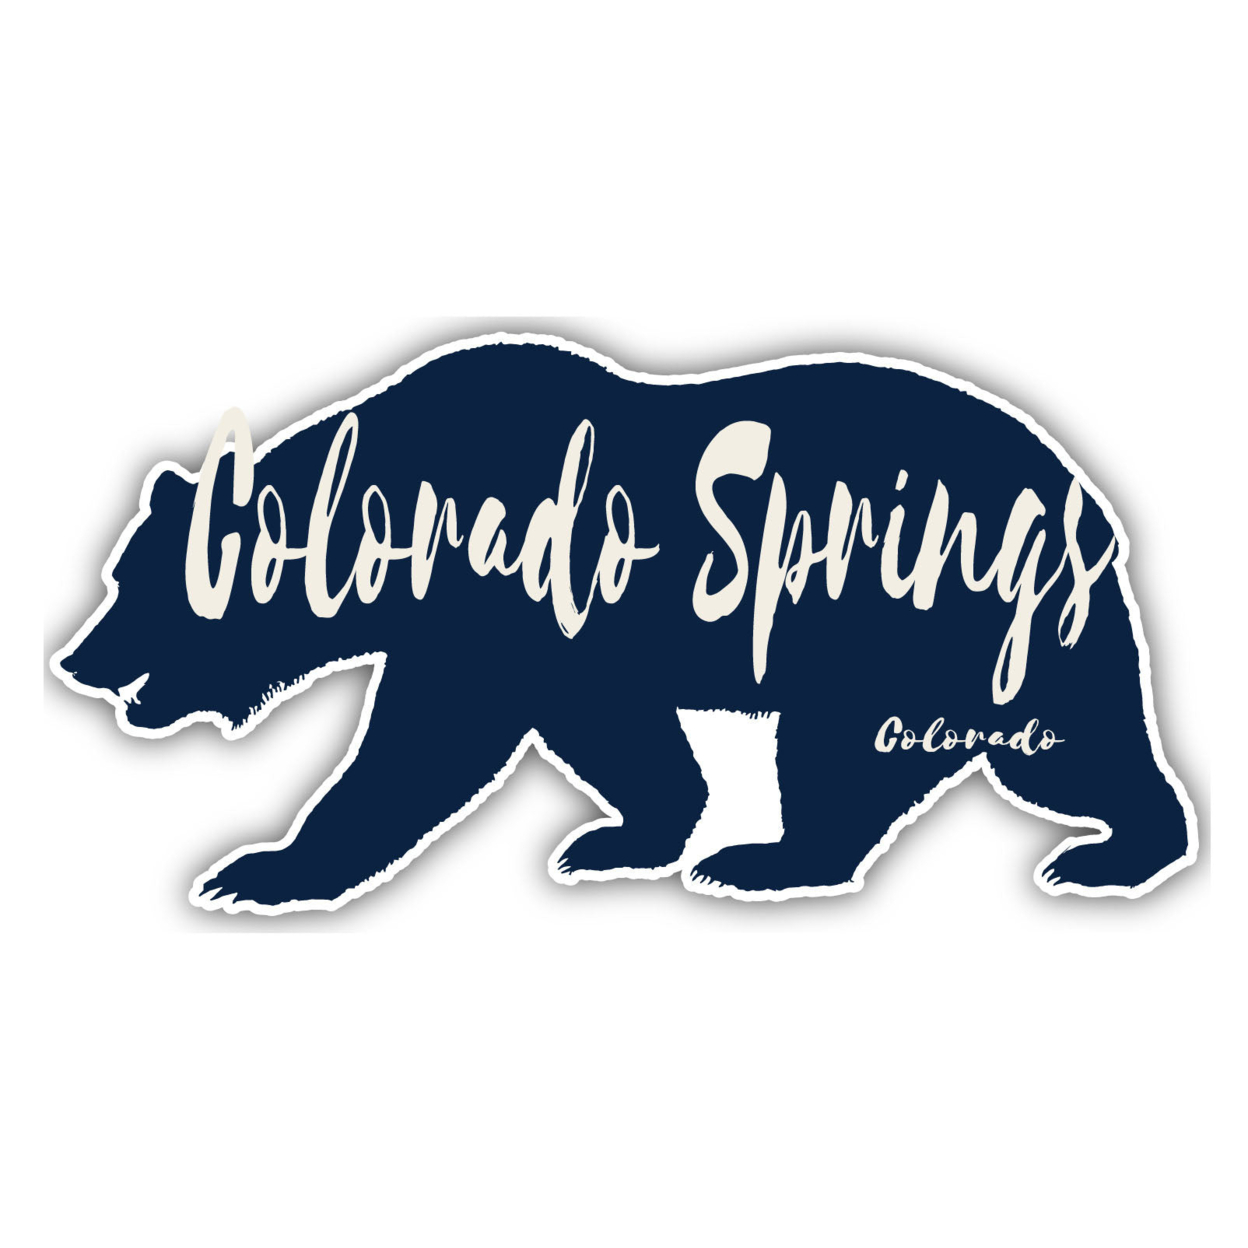 Colorado Springs Colorado Souvenir Decorative Stickers (Choose Theme And Size) - Single Unit, 4-Inch, Tent